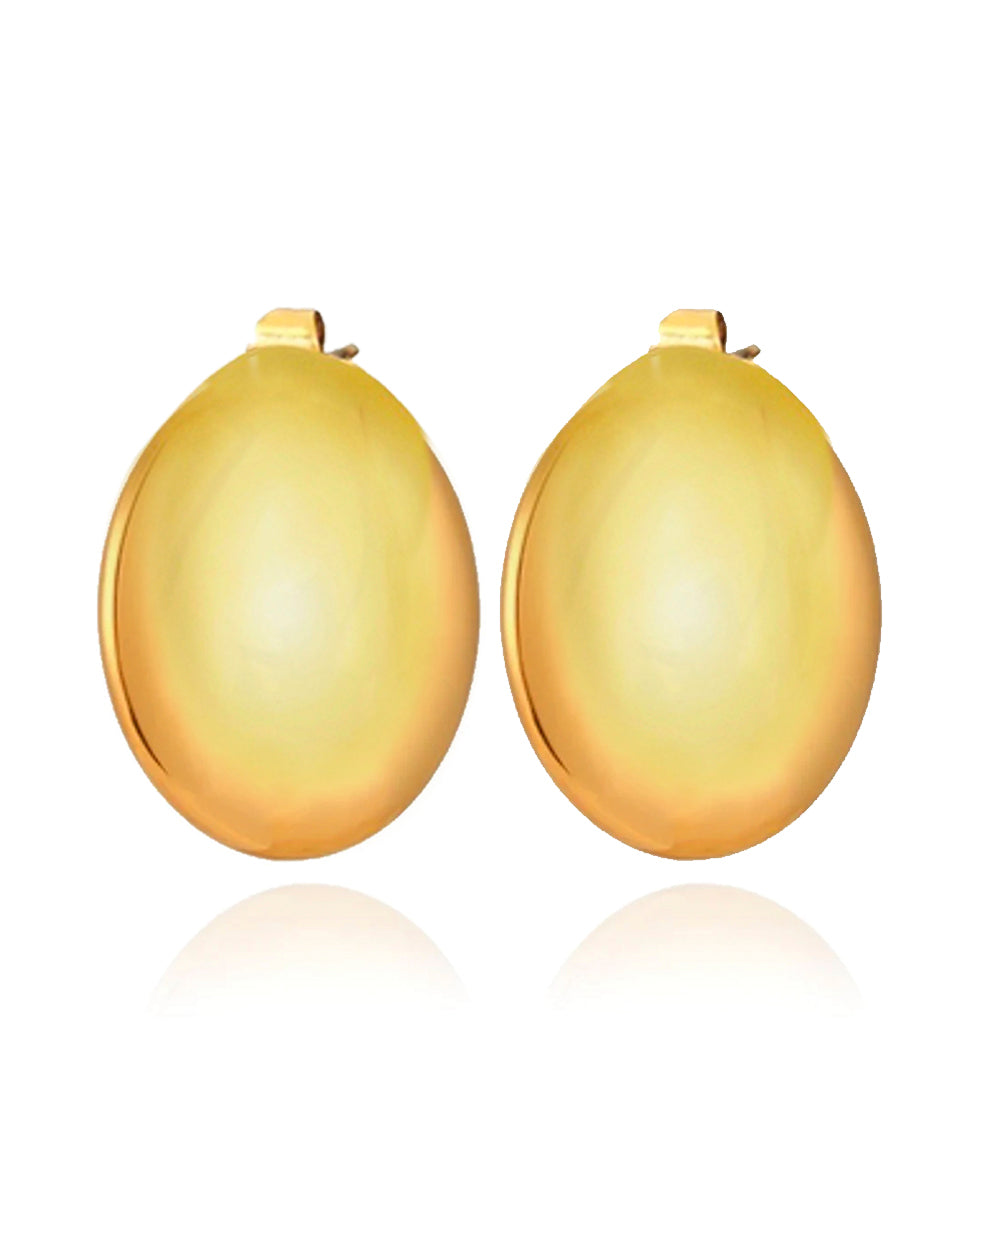 Decade Earrings - Gold